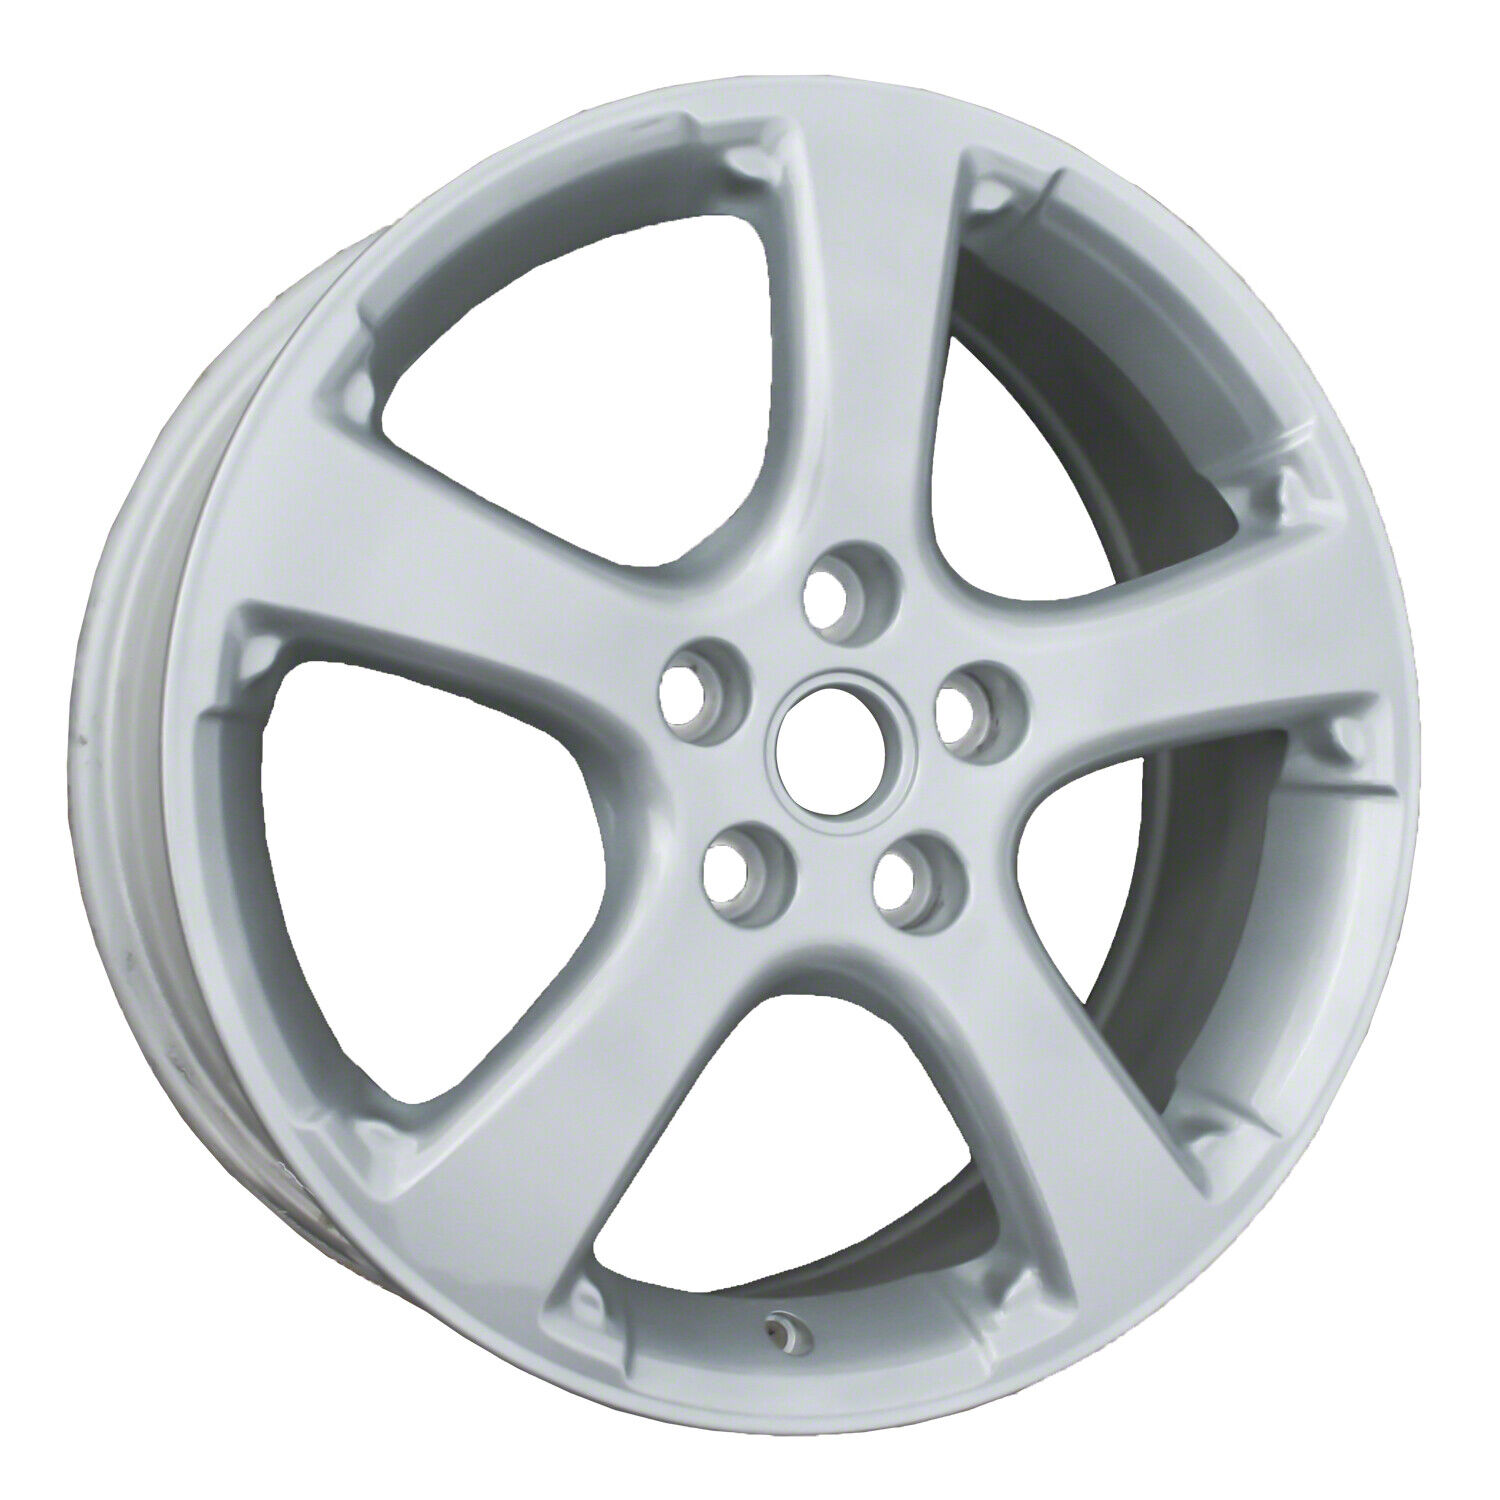 06627 Reconditioned OEM Rear Aluminum Wheel 18x7 fits 2007-2008 Grand Prix